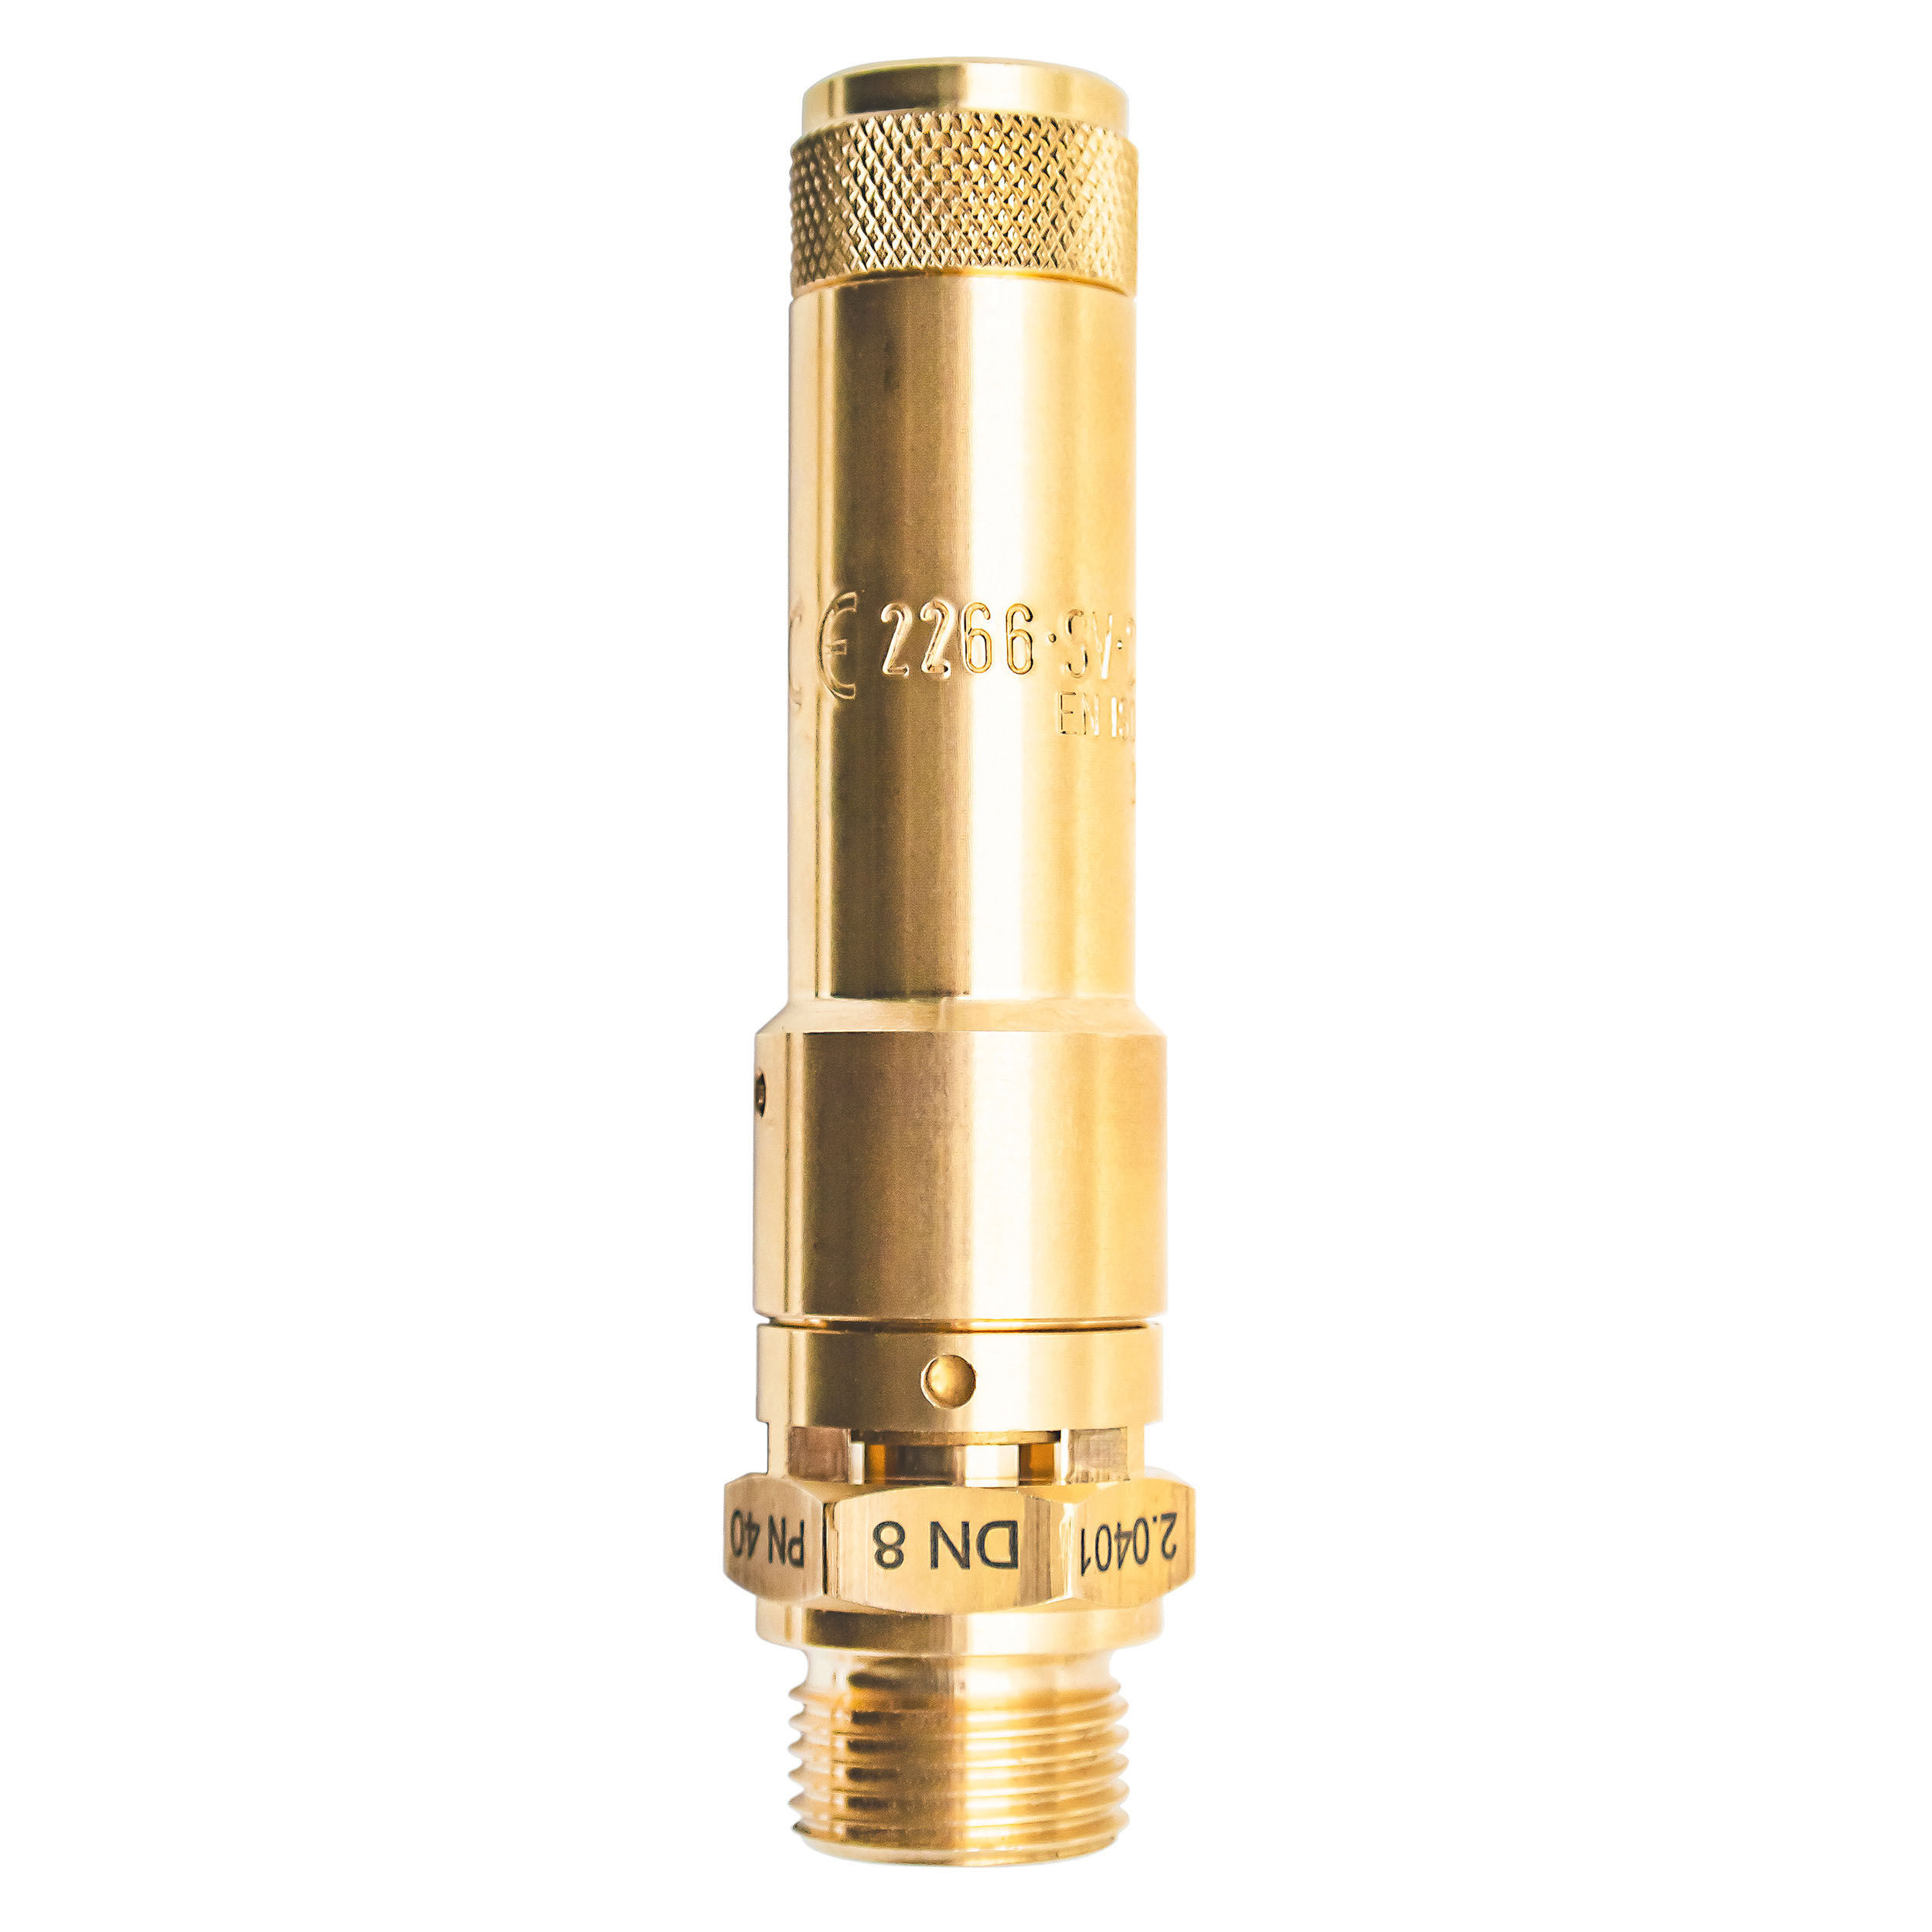 Savety valve component tested DN 8, G⅜, set pressure: 1.6 bar (23,2 psi)